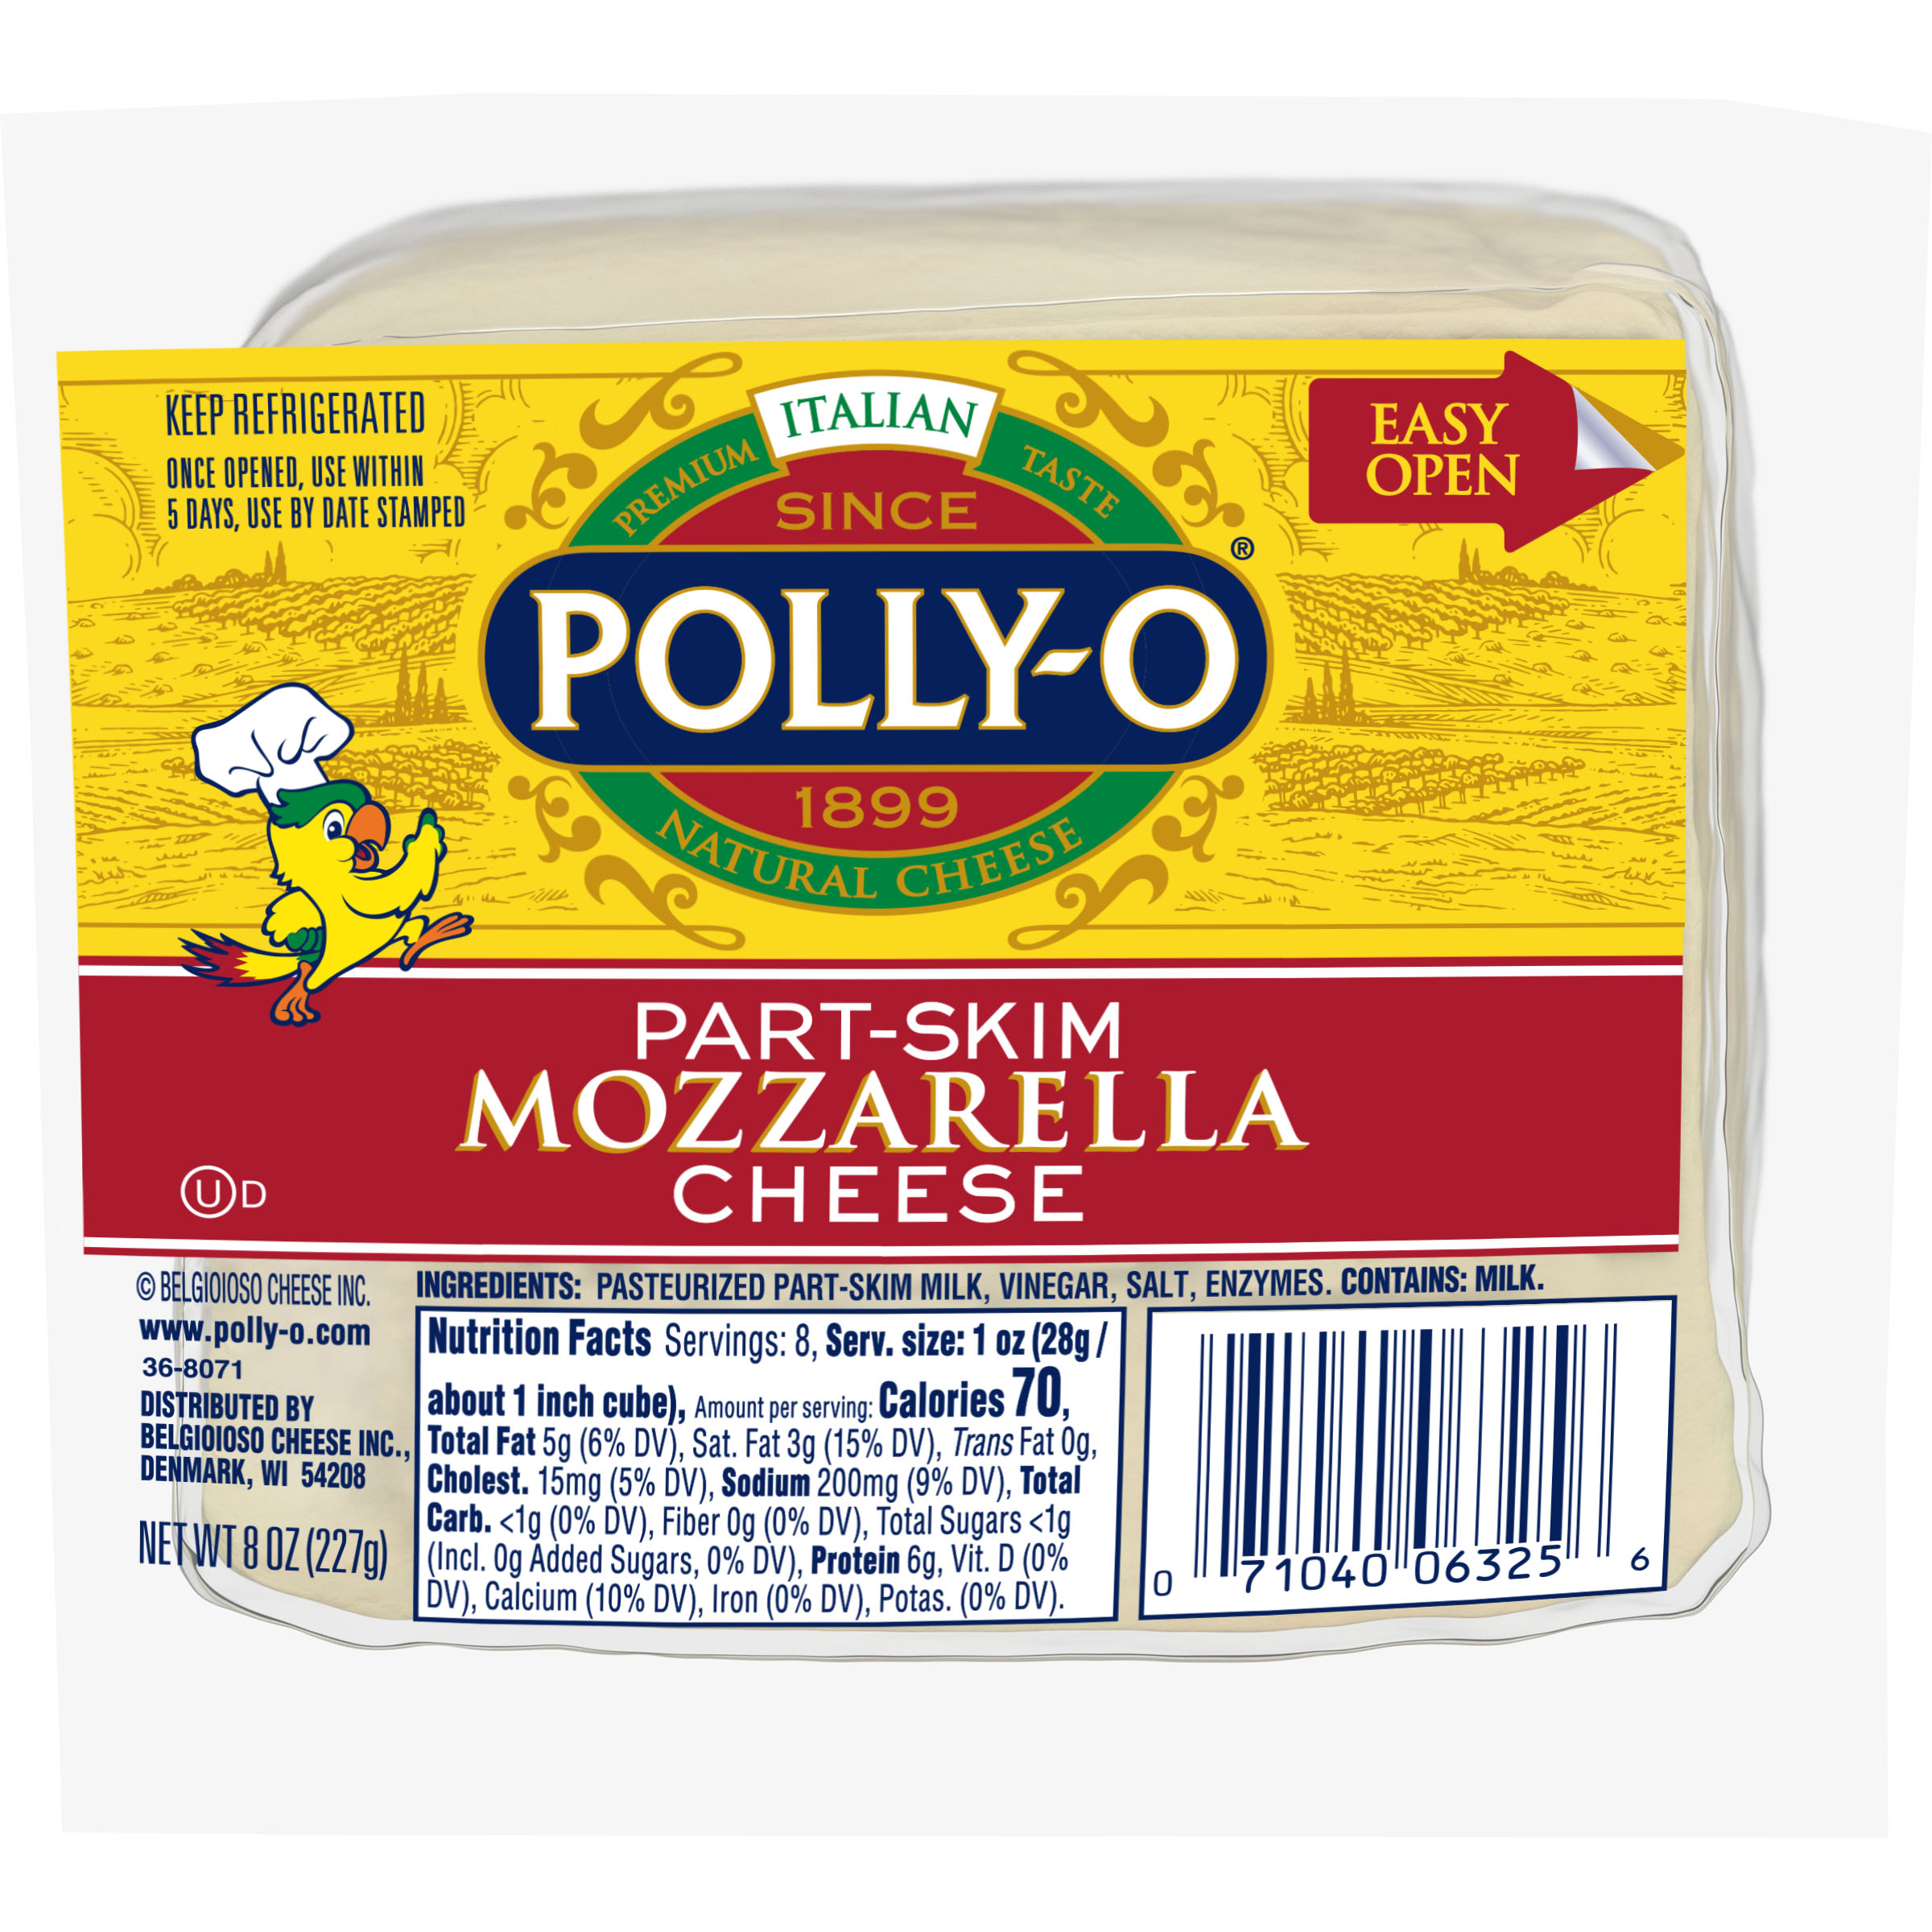 Low Moisture Part Skim Mozzarella ⓊD, 8 oz. Chunk